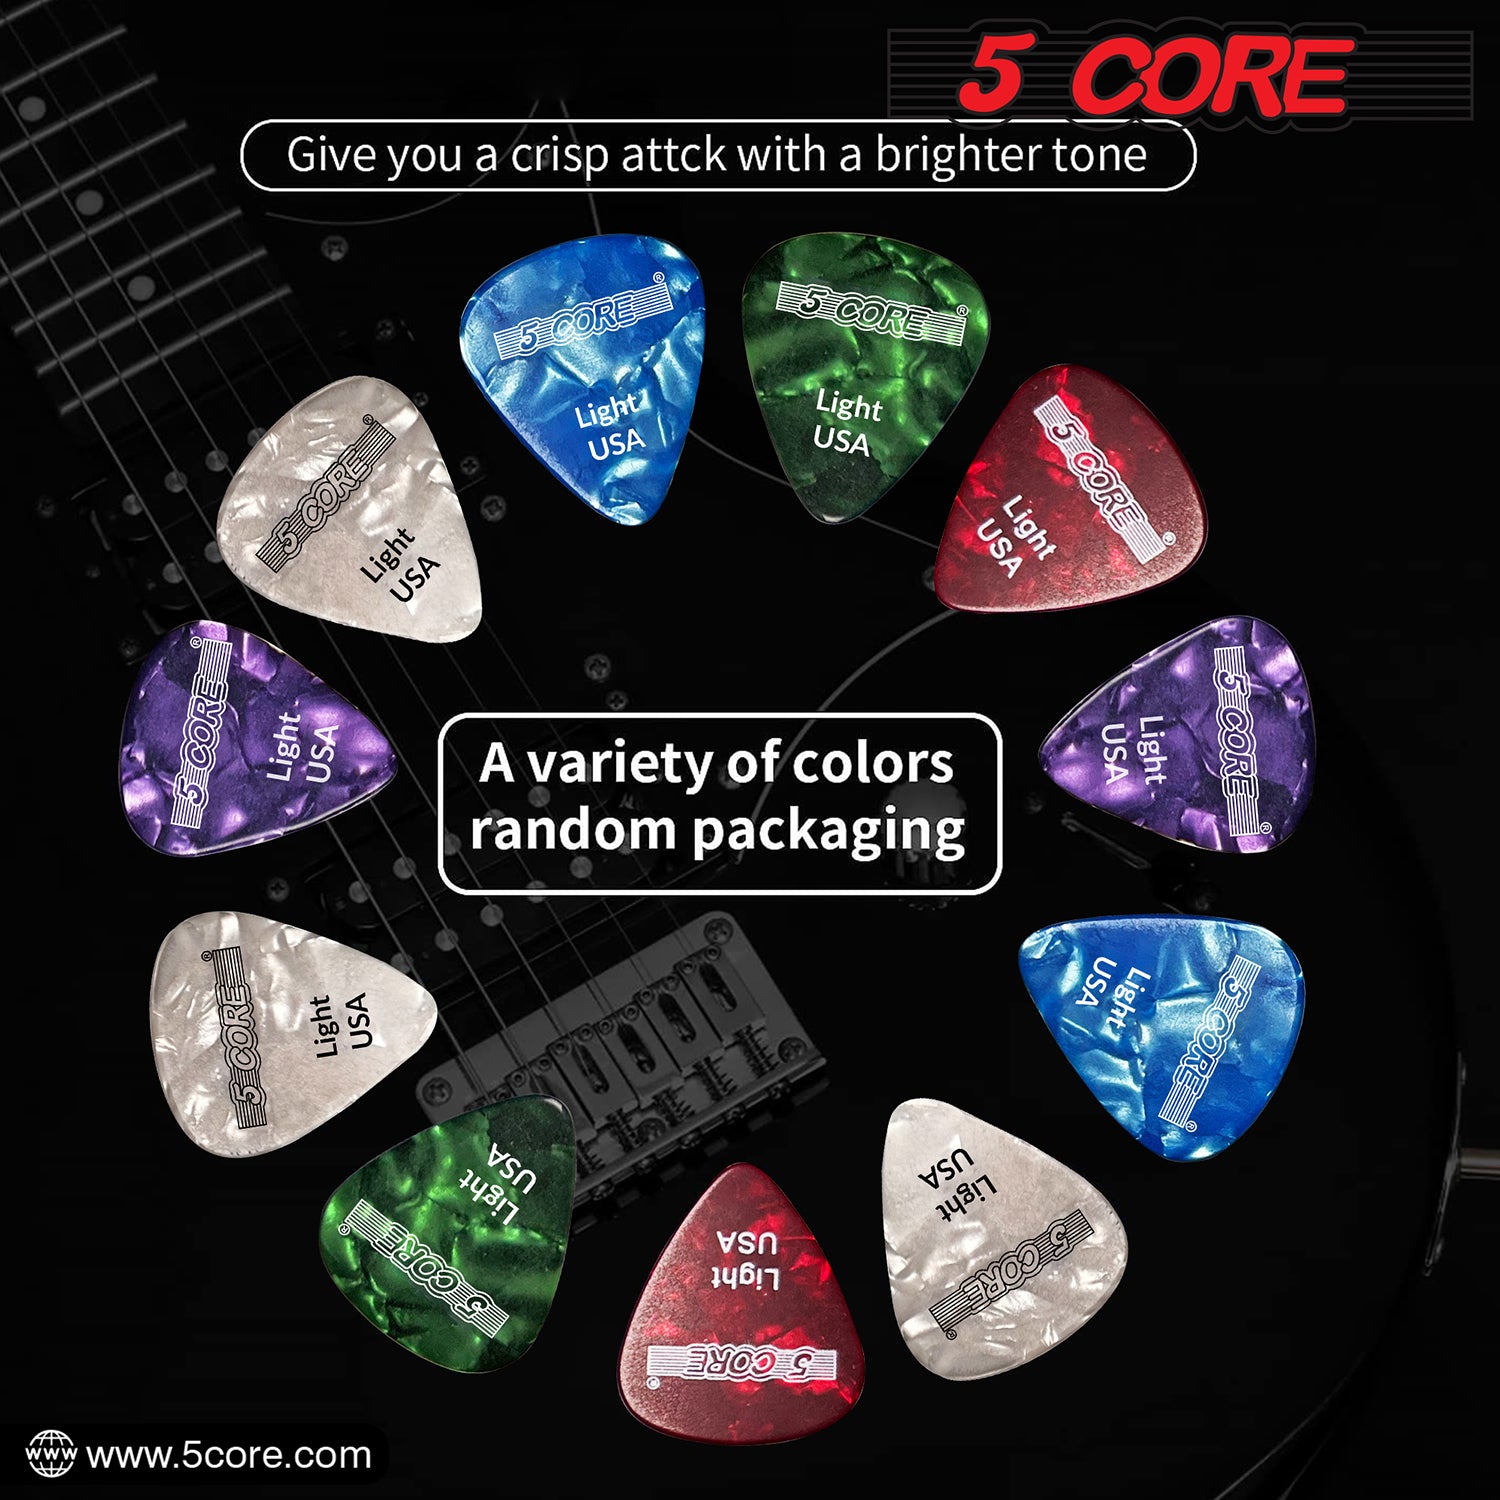 5 Core Celluloid Guitar Picks 12Pack Green Light Gauge Plectrums for Acoustic Electric Bass Guitar